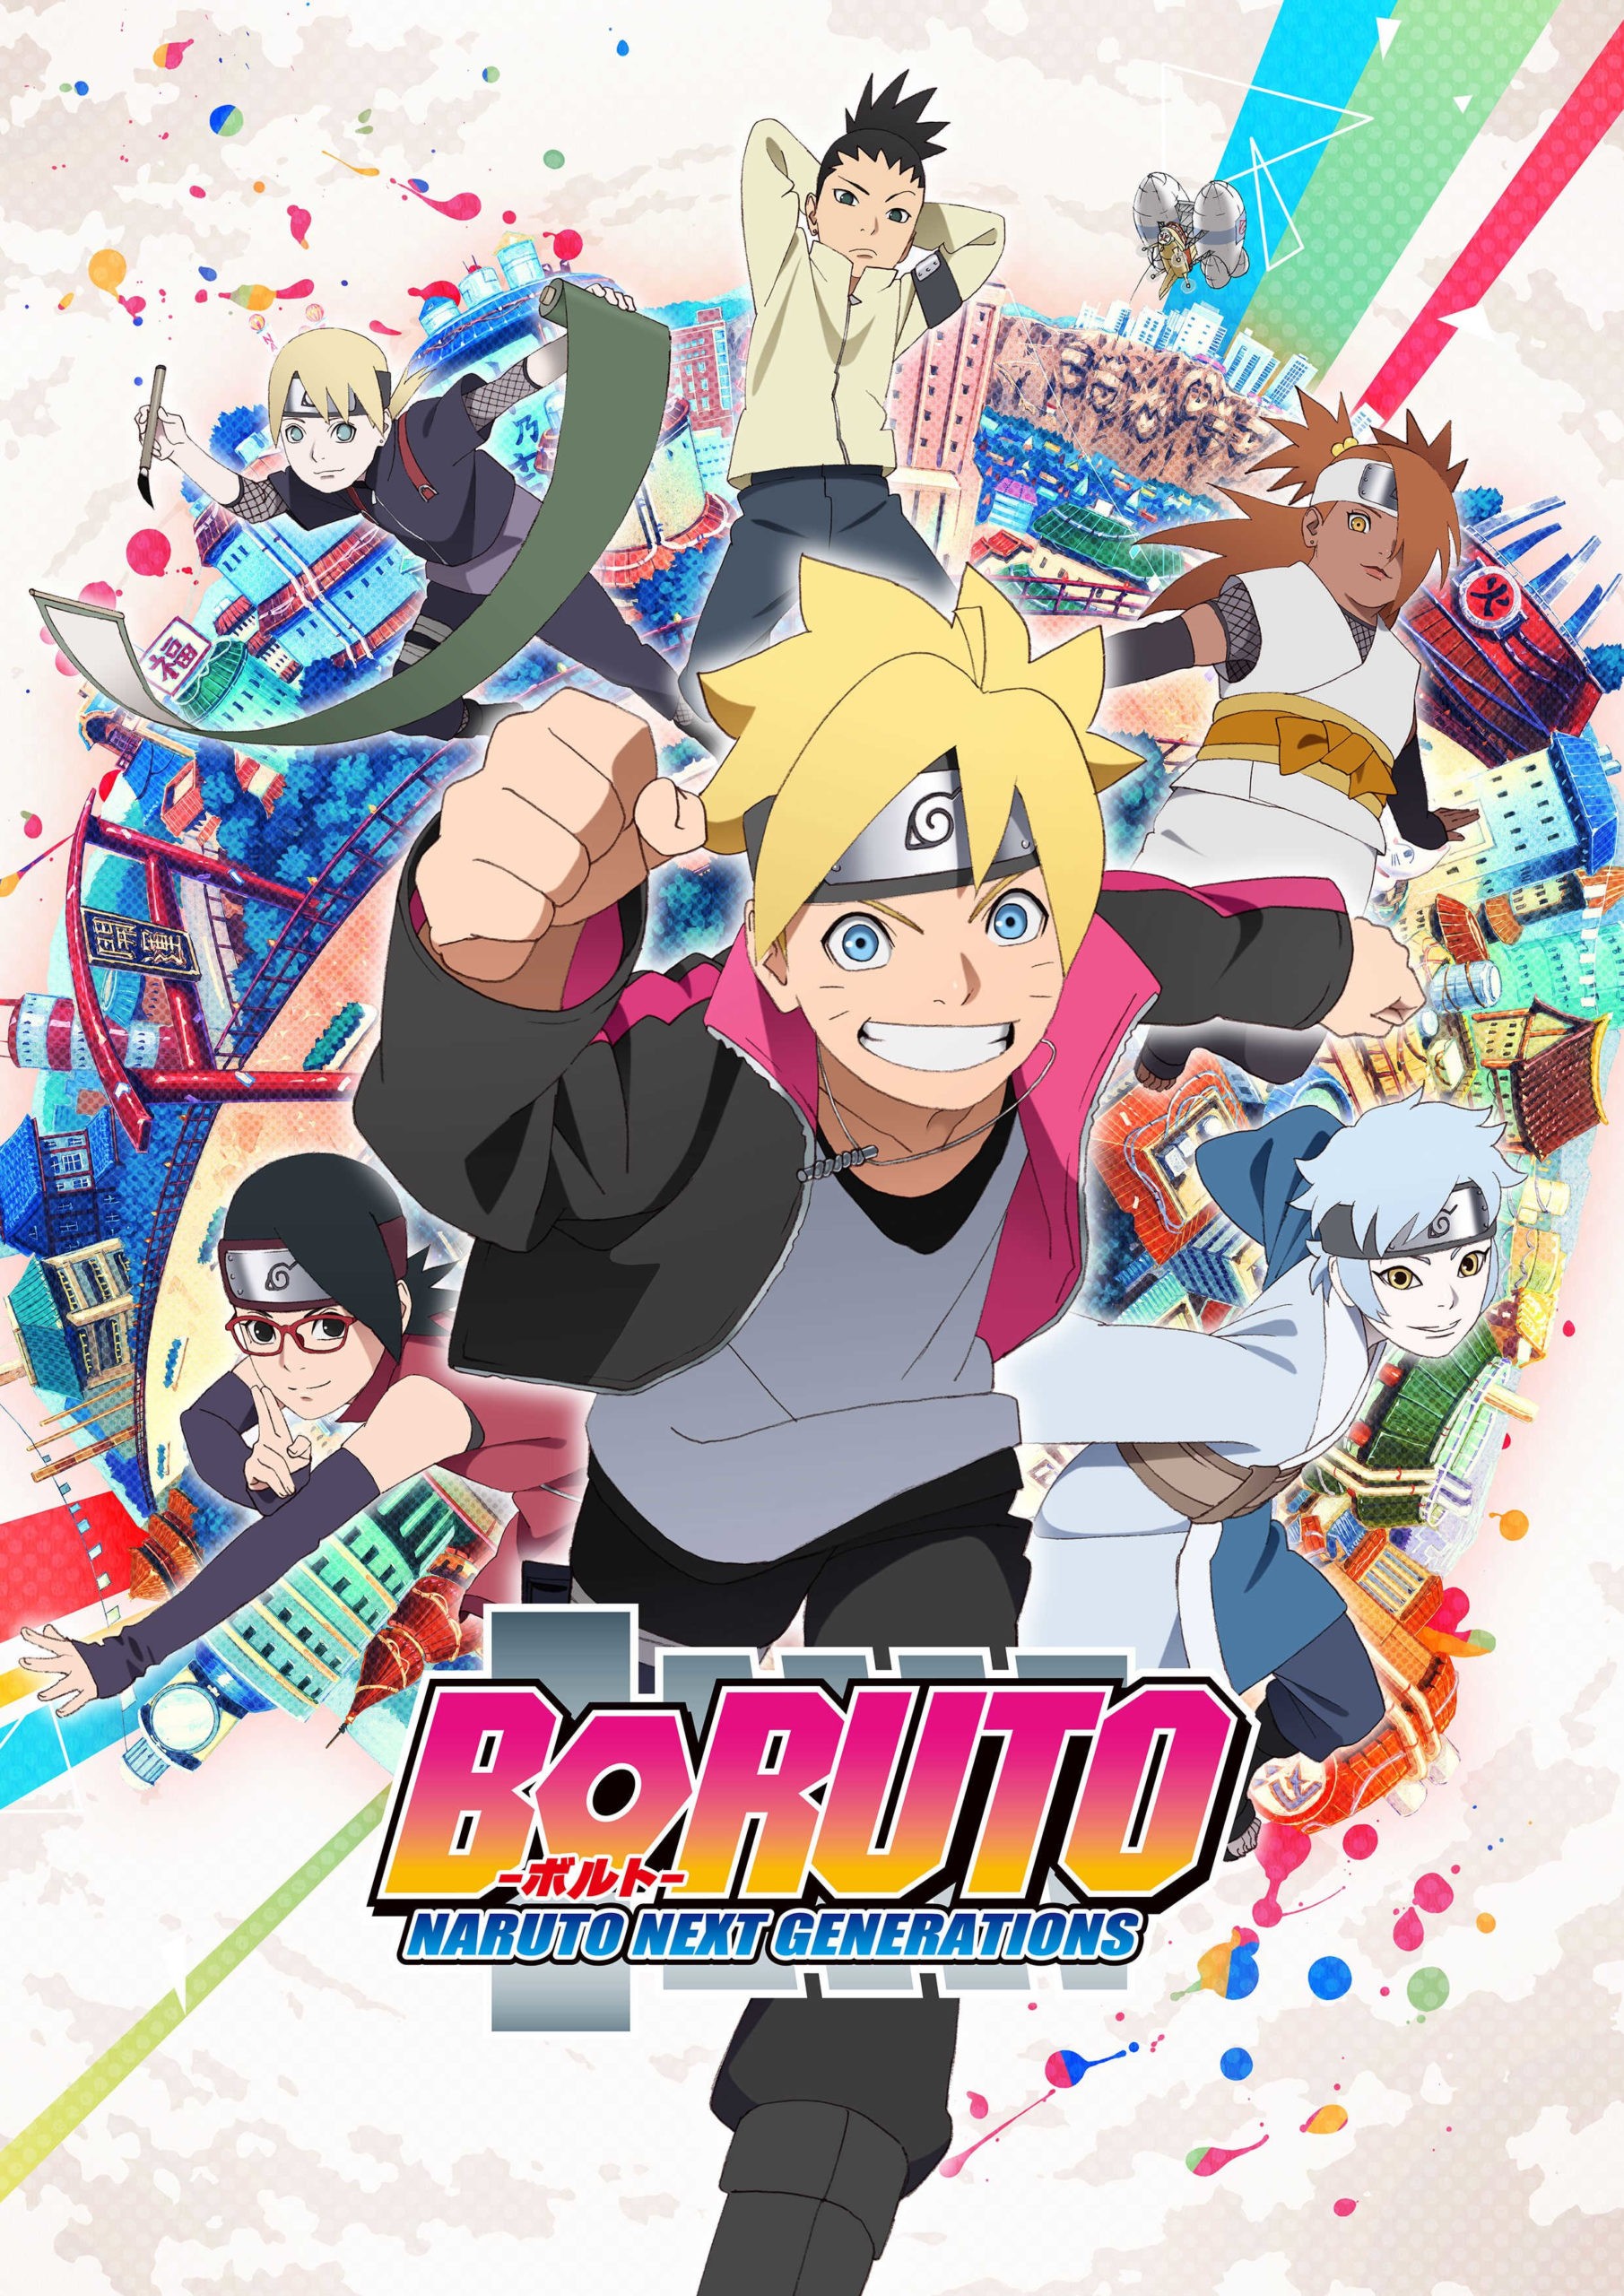 Boruto: Naruto Next Generations- When will the episode 155 air?